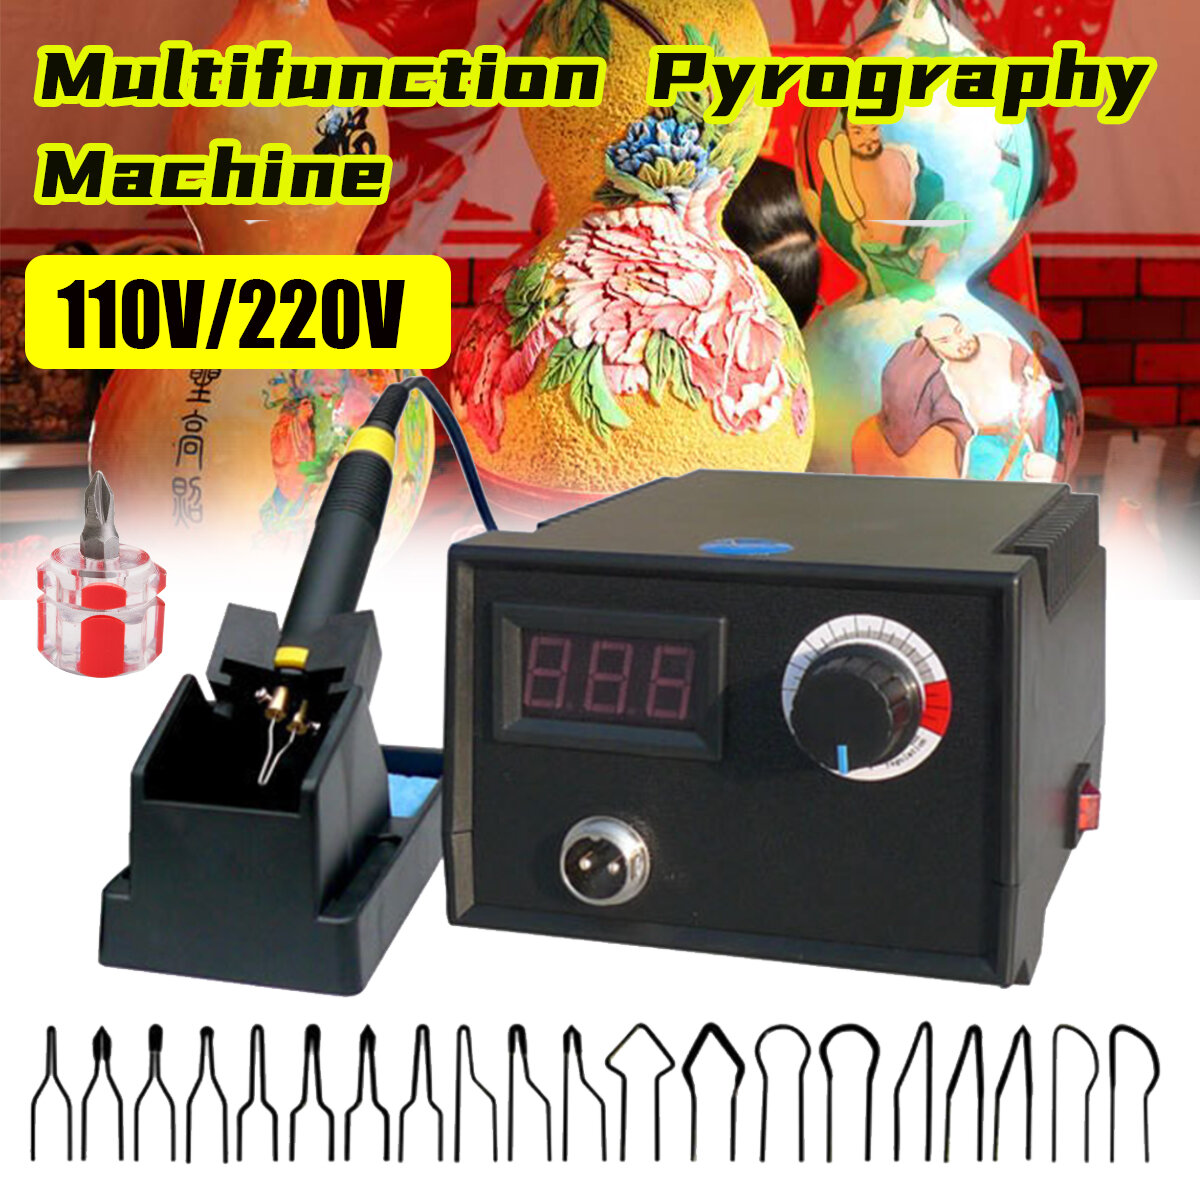 

110V/220V Digital Multifunction Pyrography Machine Gourd Wood Pyrography Crafts